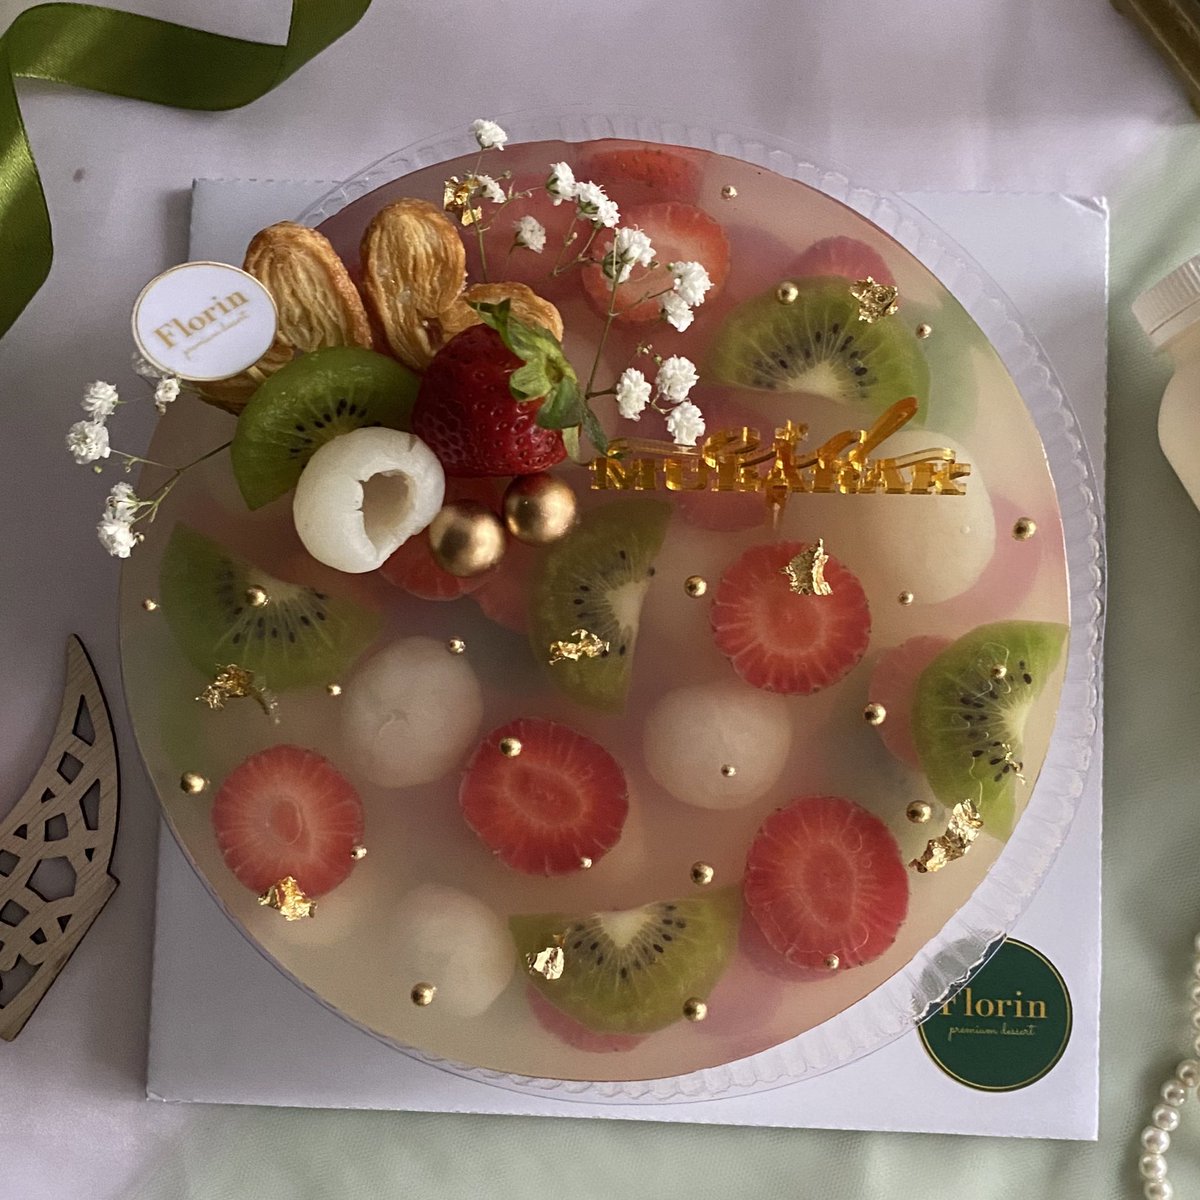 ✨BIRTHDAY PUDDING MALANG✨

🍮 Aesthetic Birthday pudding by Florin Premium Dessert
🌻Made by order 
📍Kedungkandang
💵 50 - 230 K 
☎️ wa.link/m8ng6m / our catalogue : lynk.id/florindessert

#pasarmingguinfomalang @infomalang